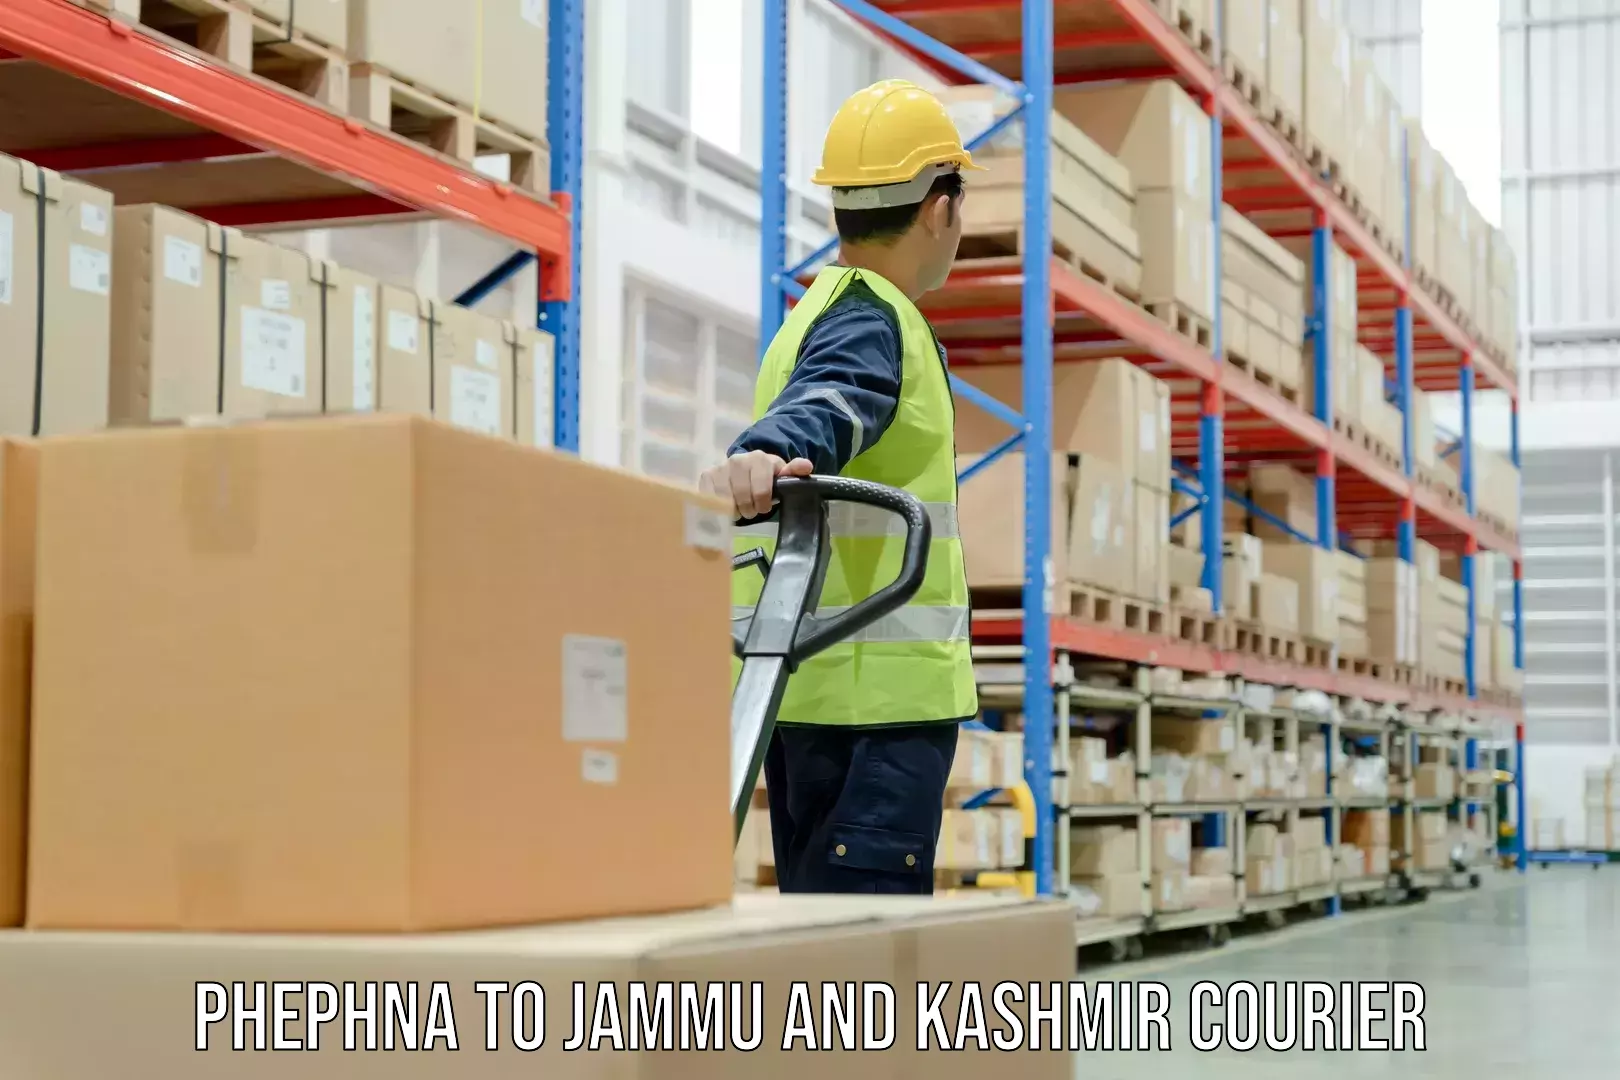 Enhanced shipping experience Phephna to Jammu and Kashmir